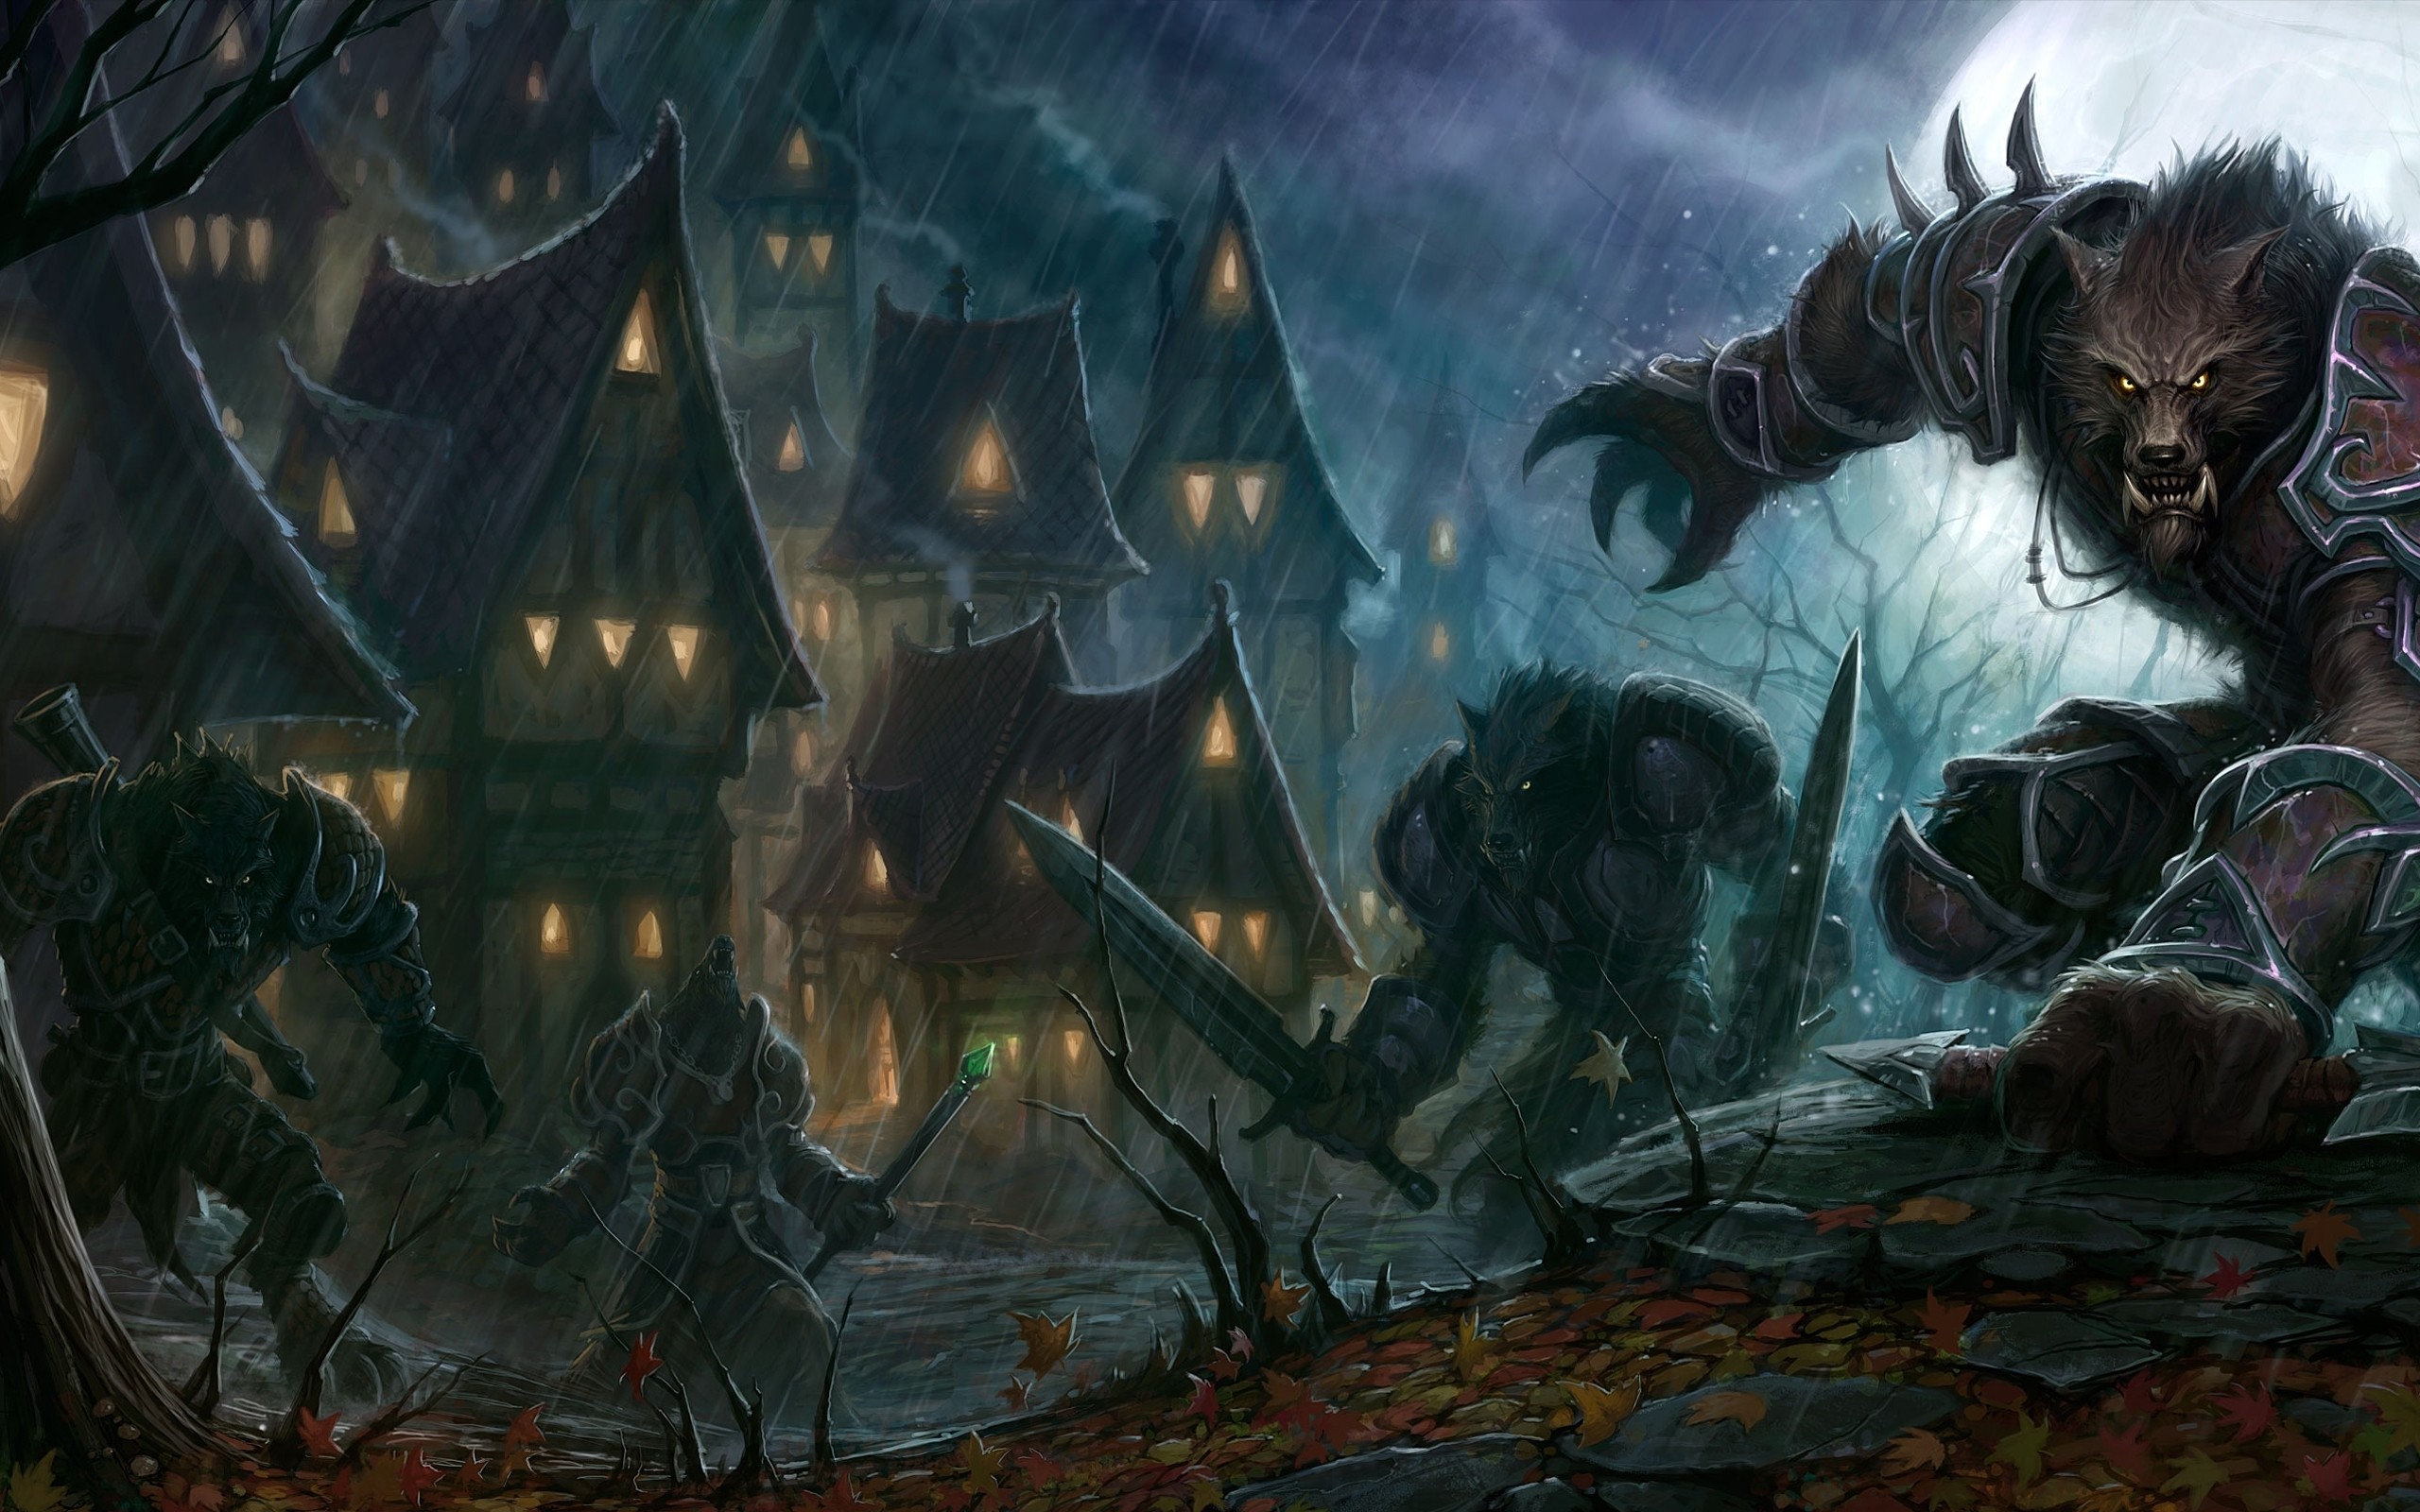 2560x1600 World of warcraft houses moonlight armor werewolf swords raining wallpaper